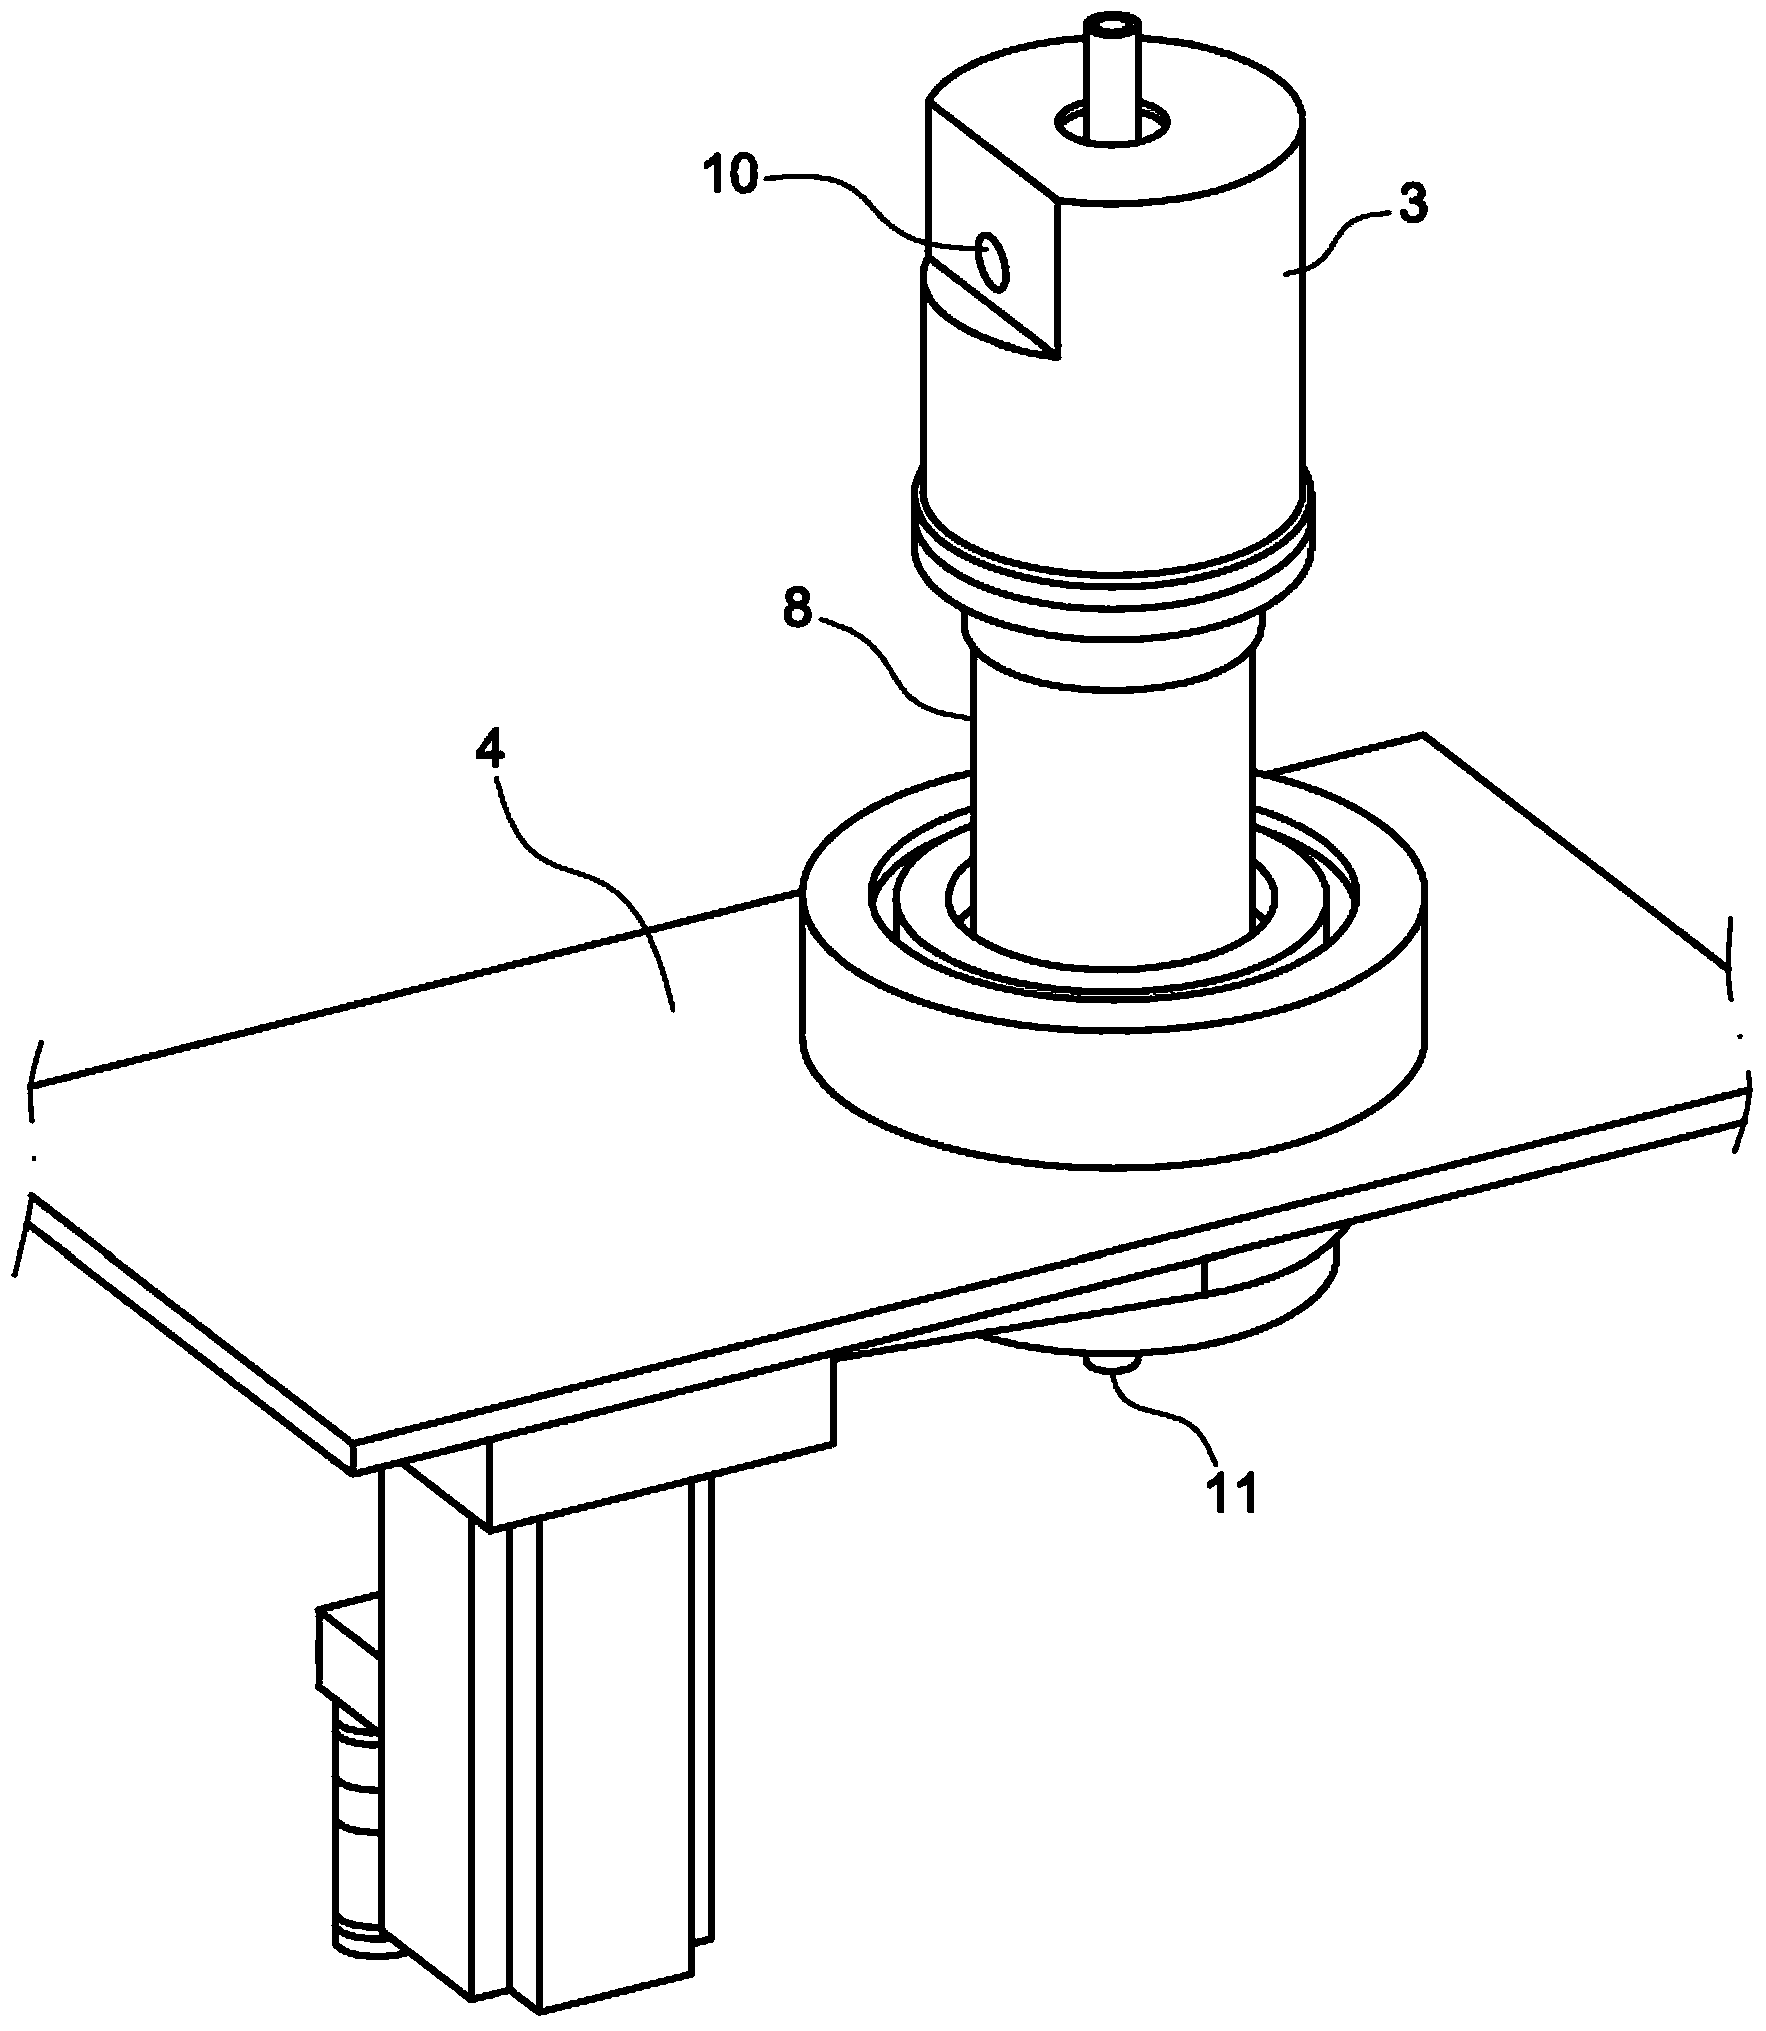 Laminar-flow centrifugal separator